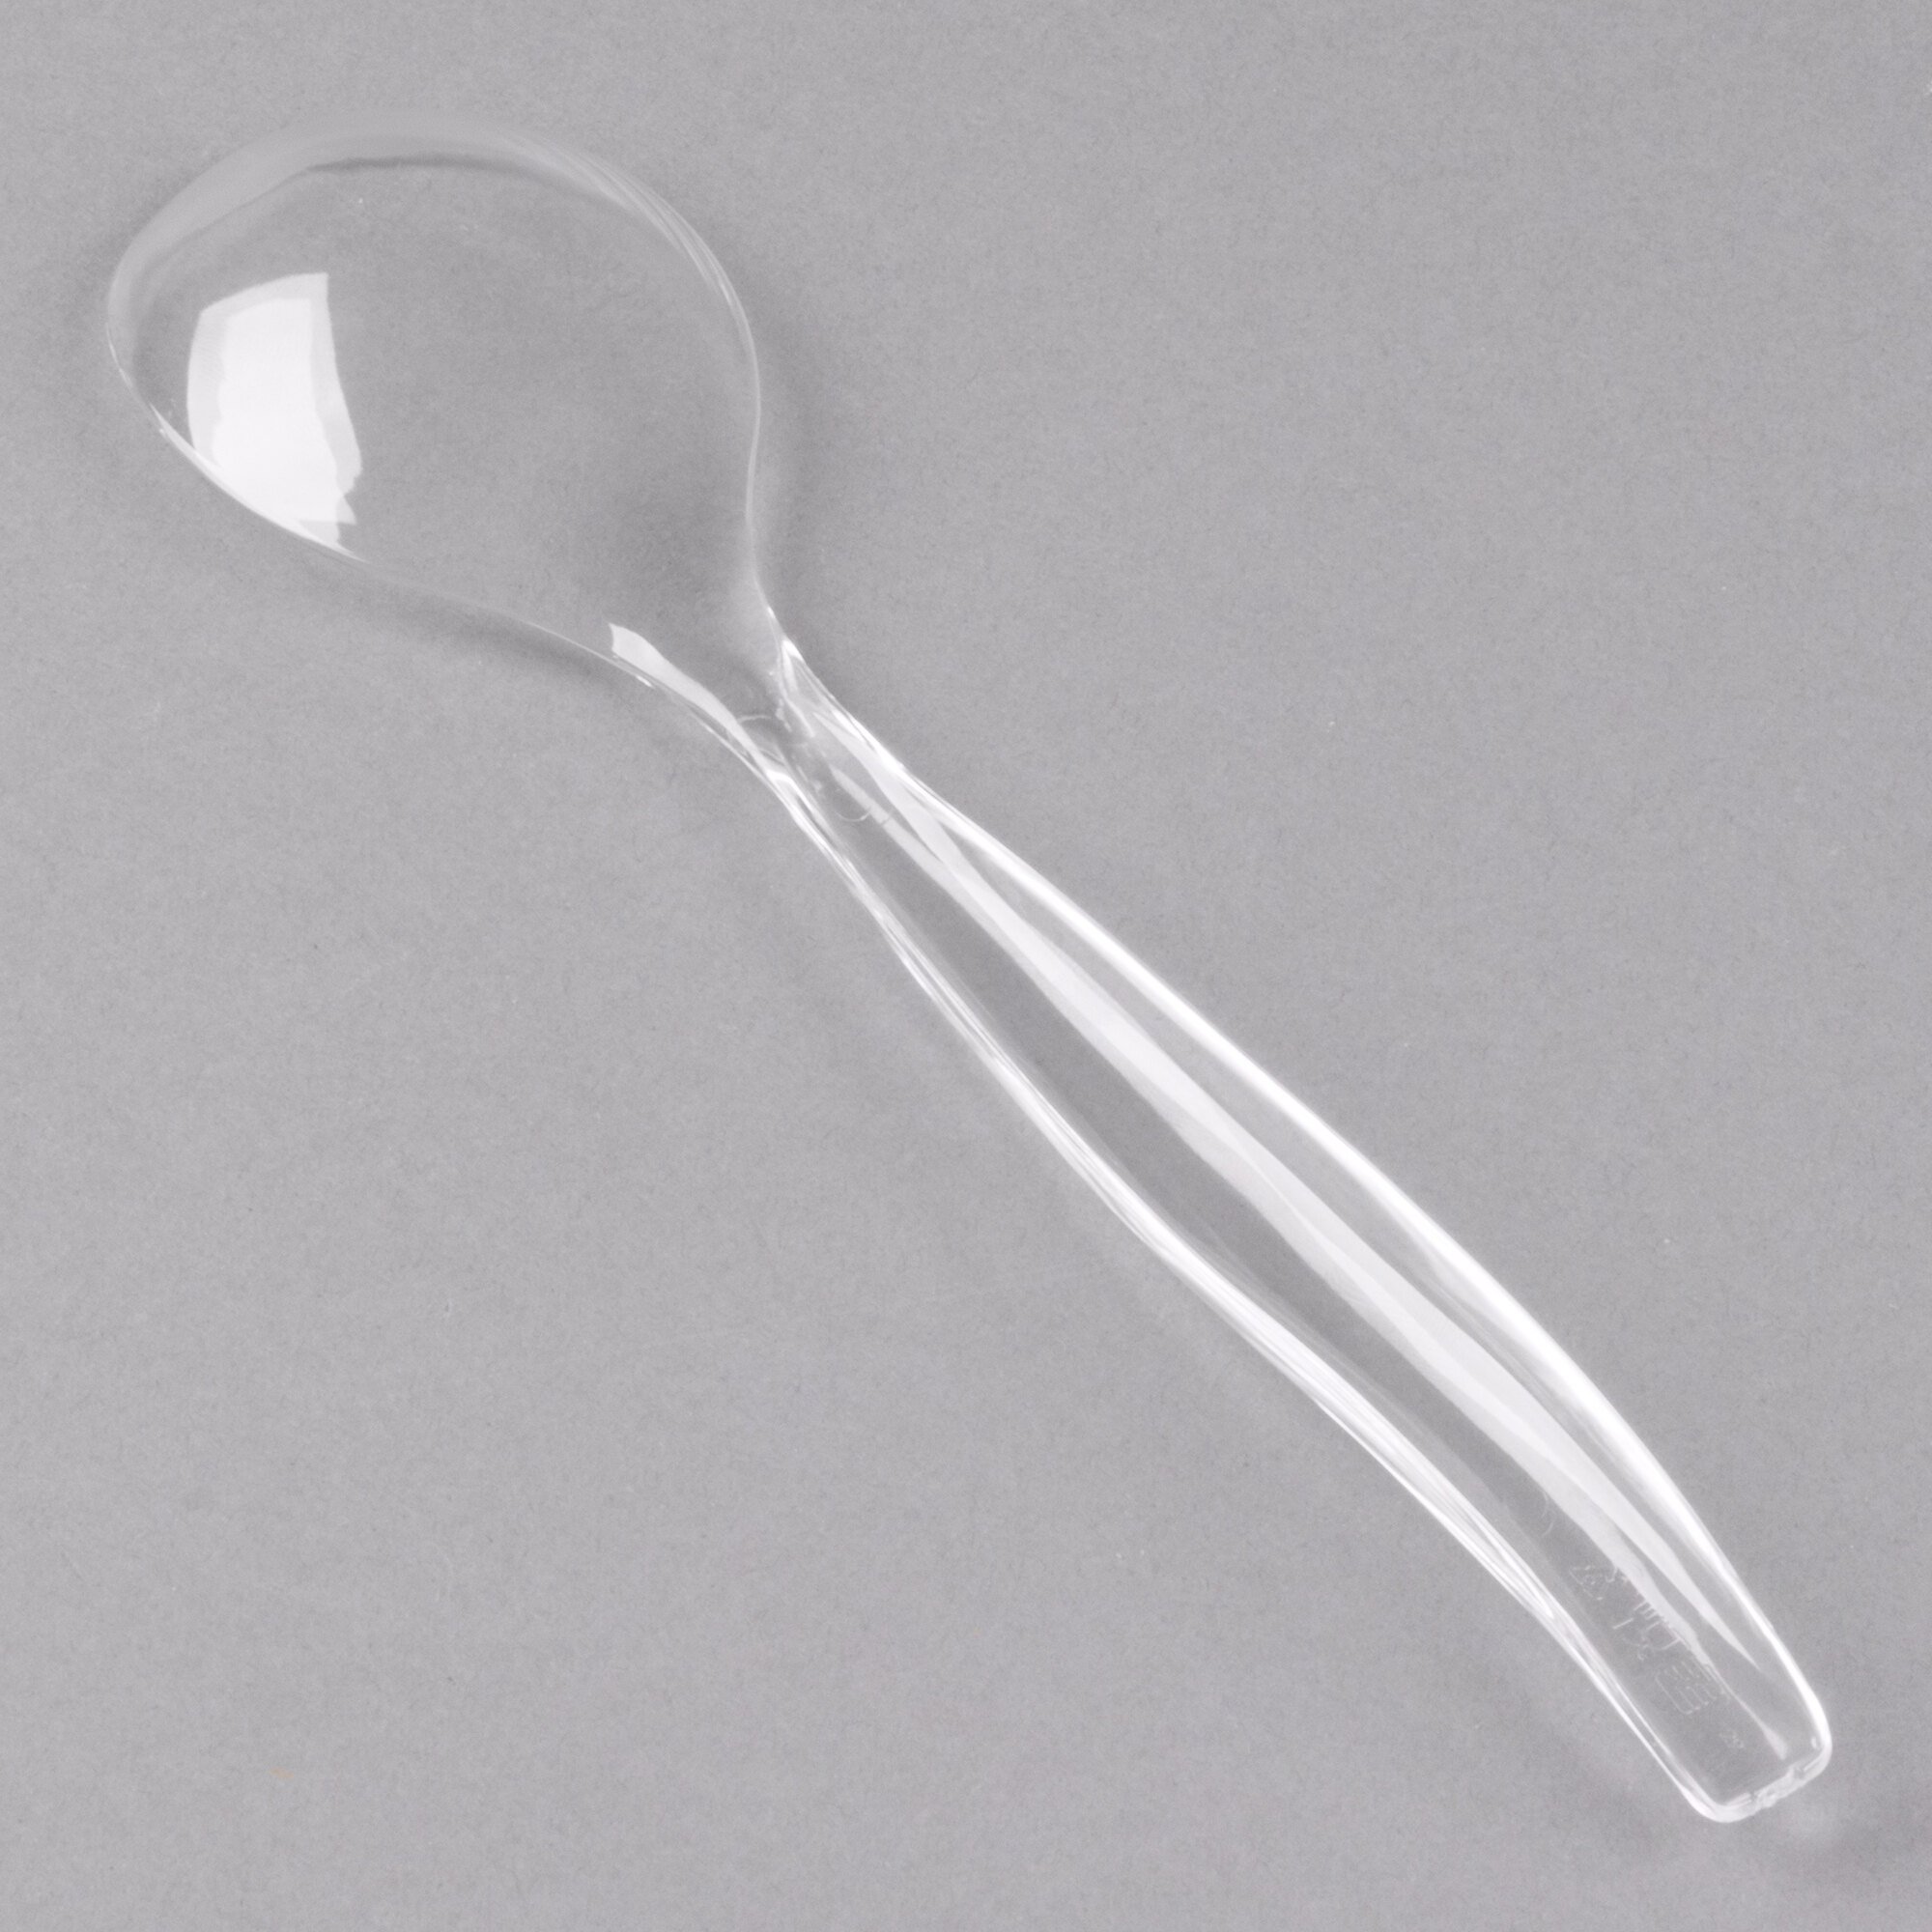 Sabert Ucl72s 10 Clear Disposable Plastic Serving Spoon 72case